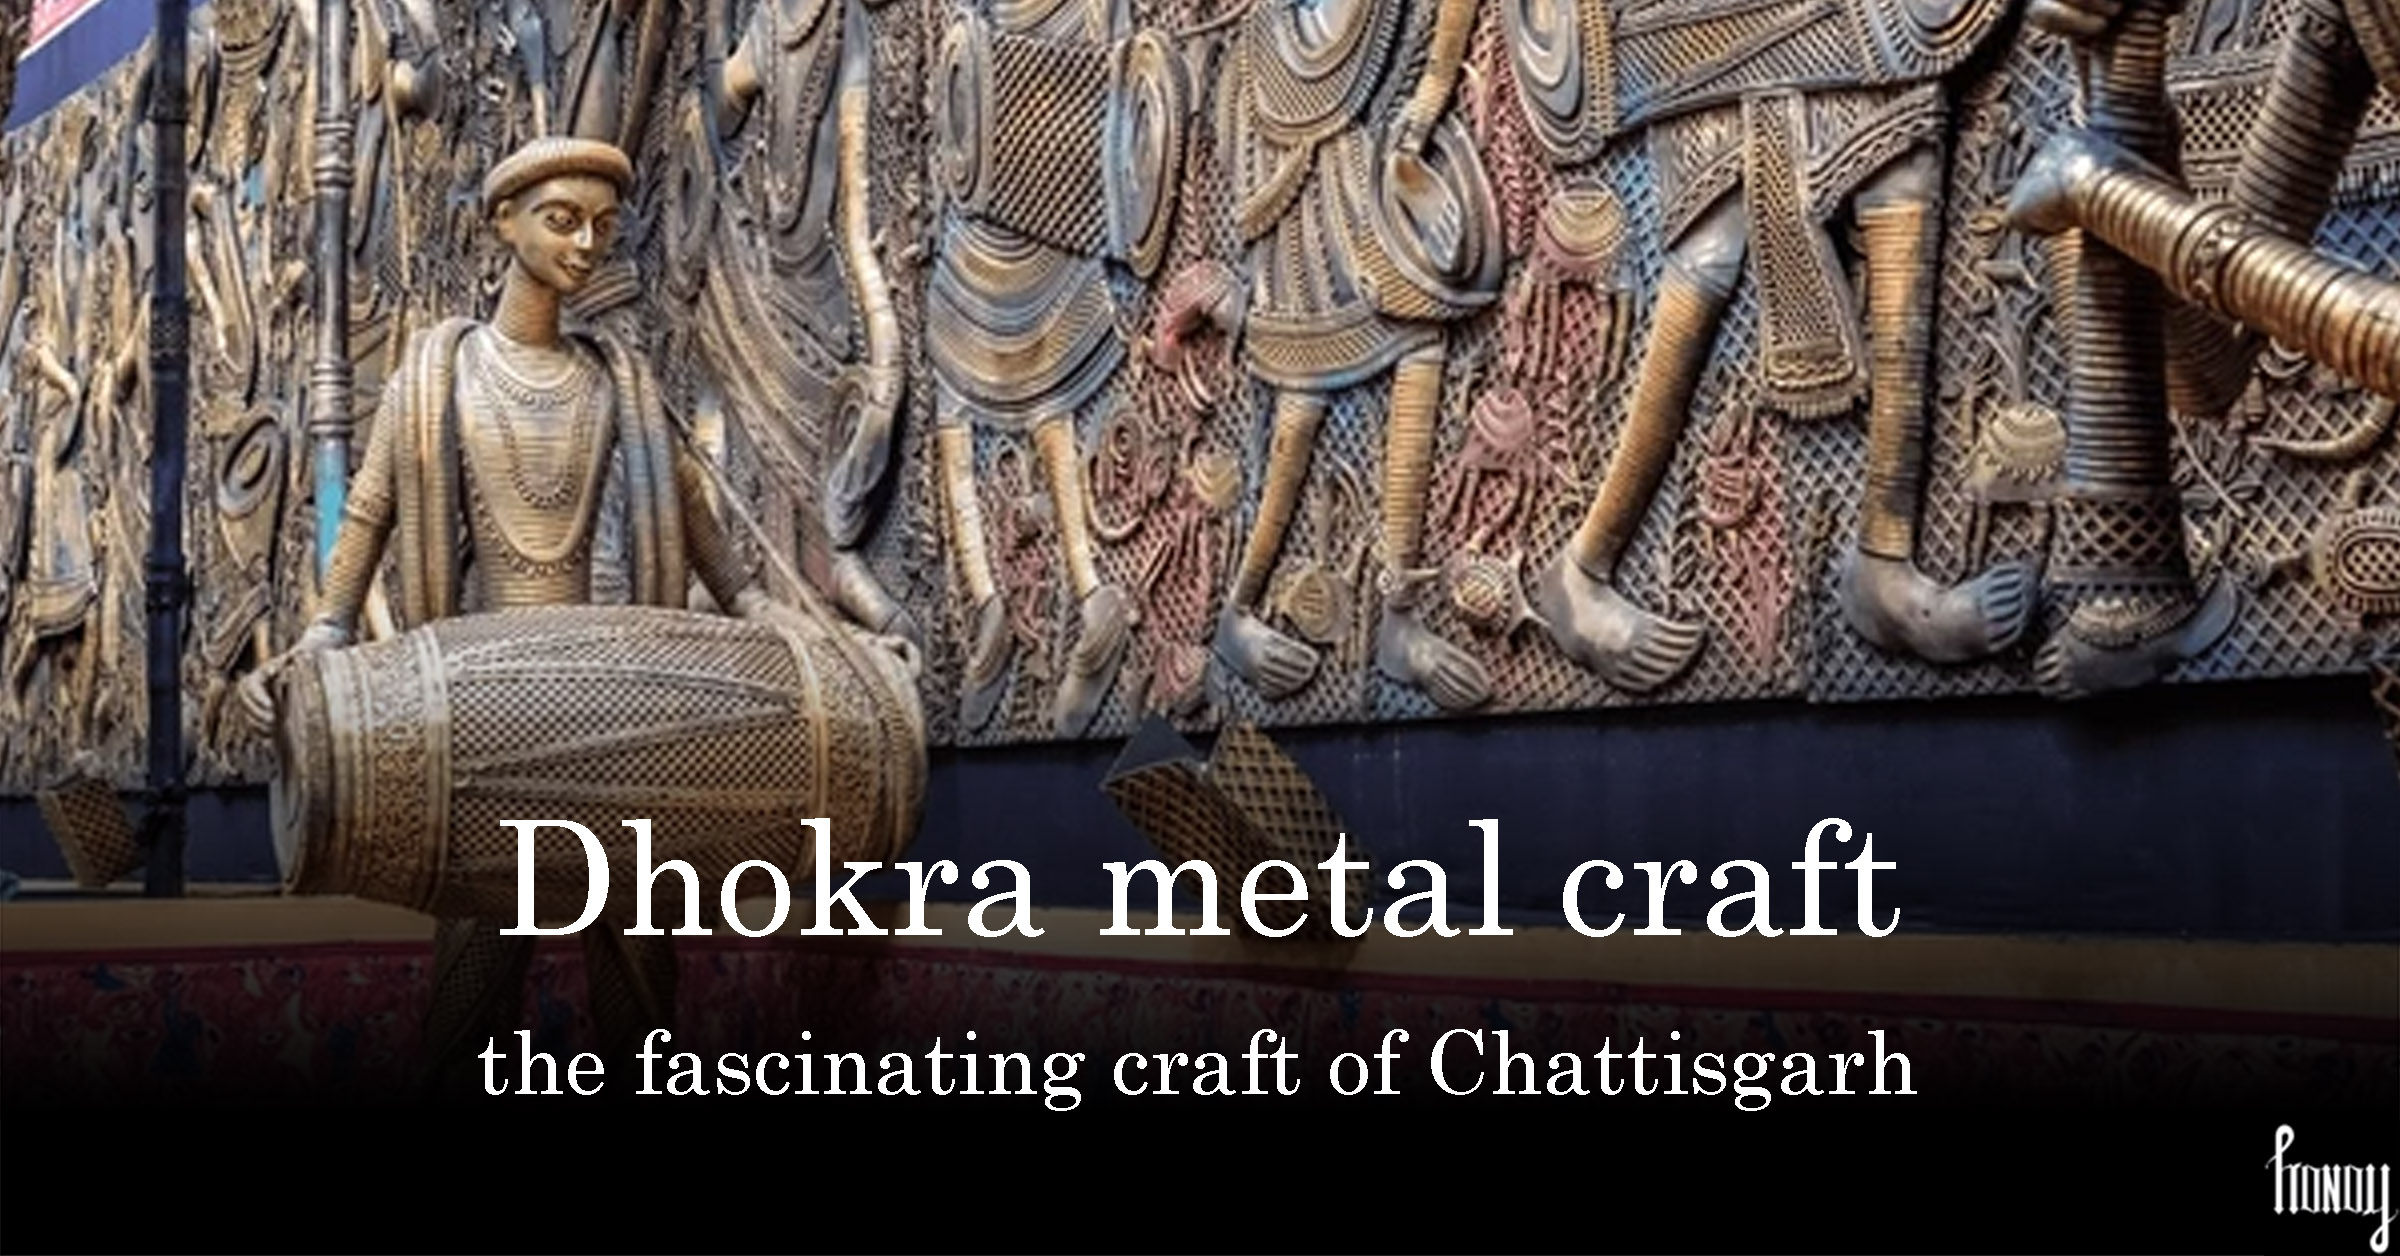 The fascinating metal craft of Chattisgarh: Dhokra